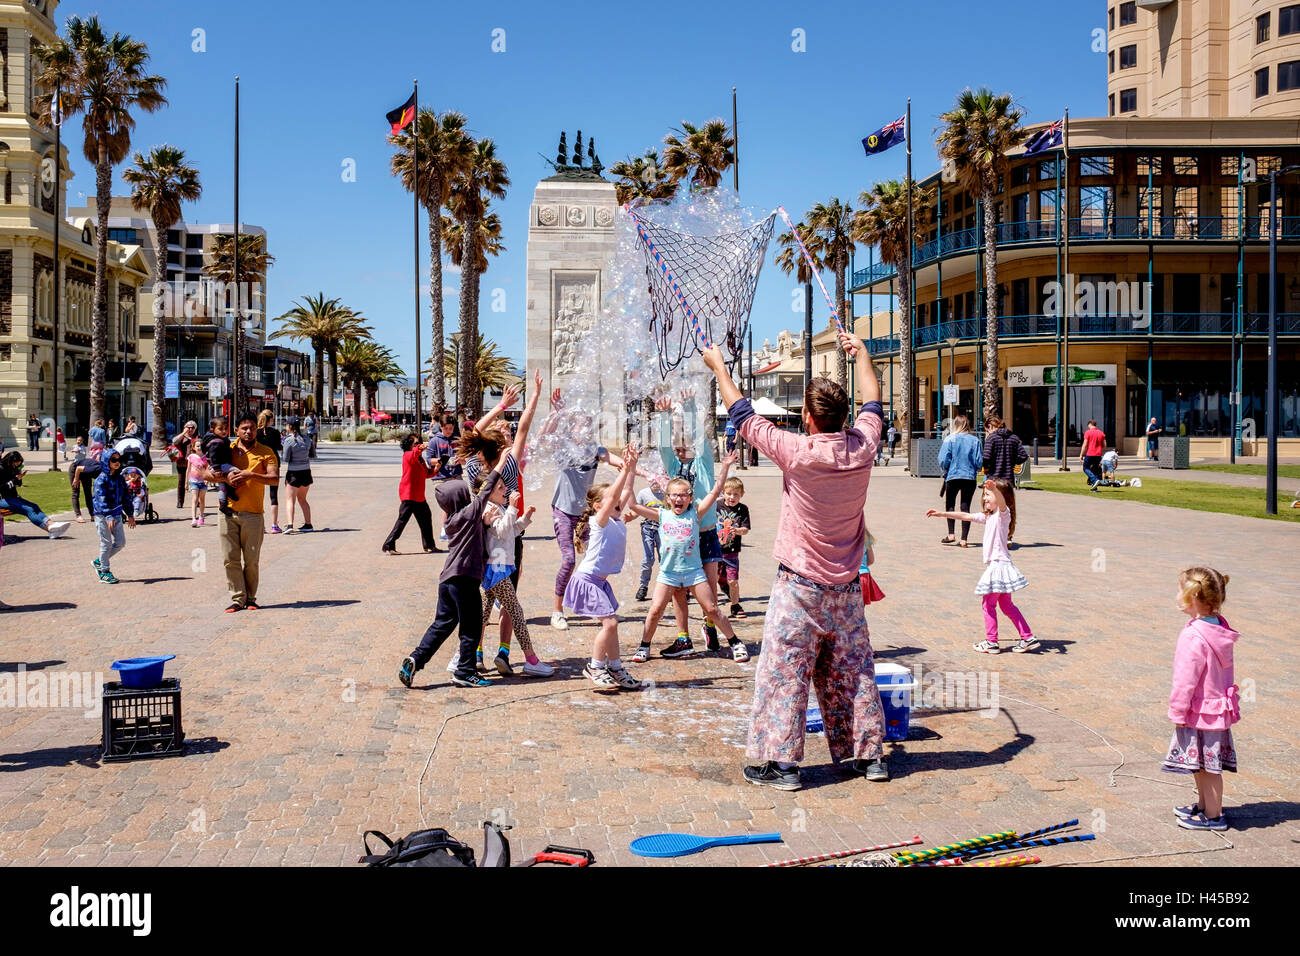 Kinder spielen im "Moseley Square" Glenelg, South Australia populärsten Strand-Entertainment-Bereich. Stockfoto